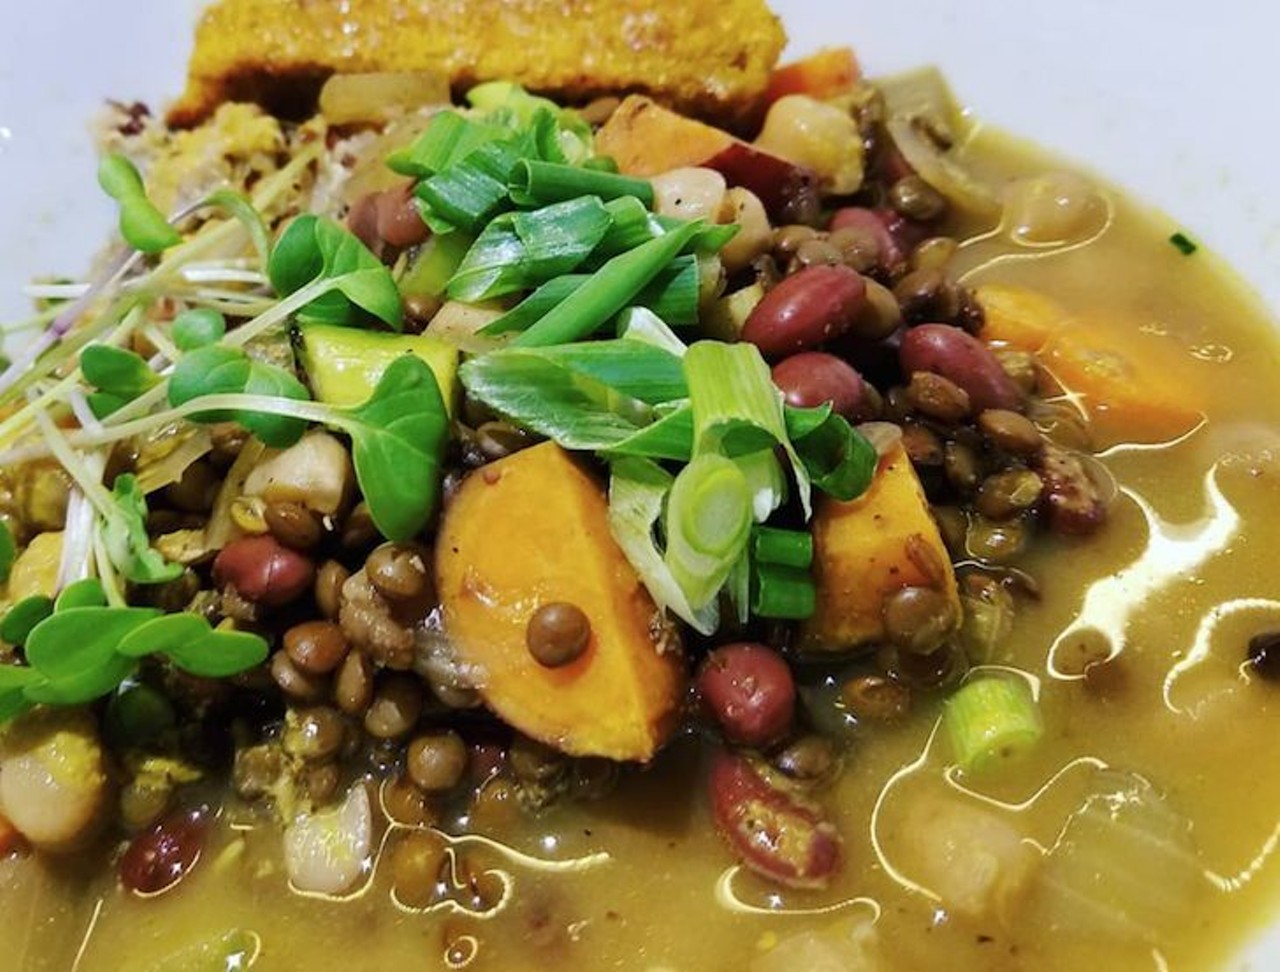 Vegan lentil stew over polenta
The Sanctum Cafe, 715 N. Fern Creek Ave.
Photo via Sanctum on Instagram